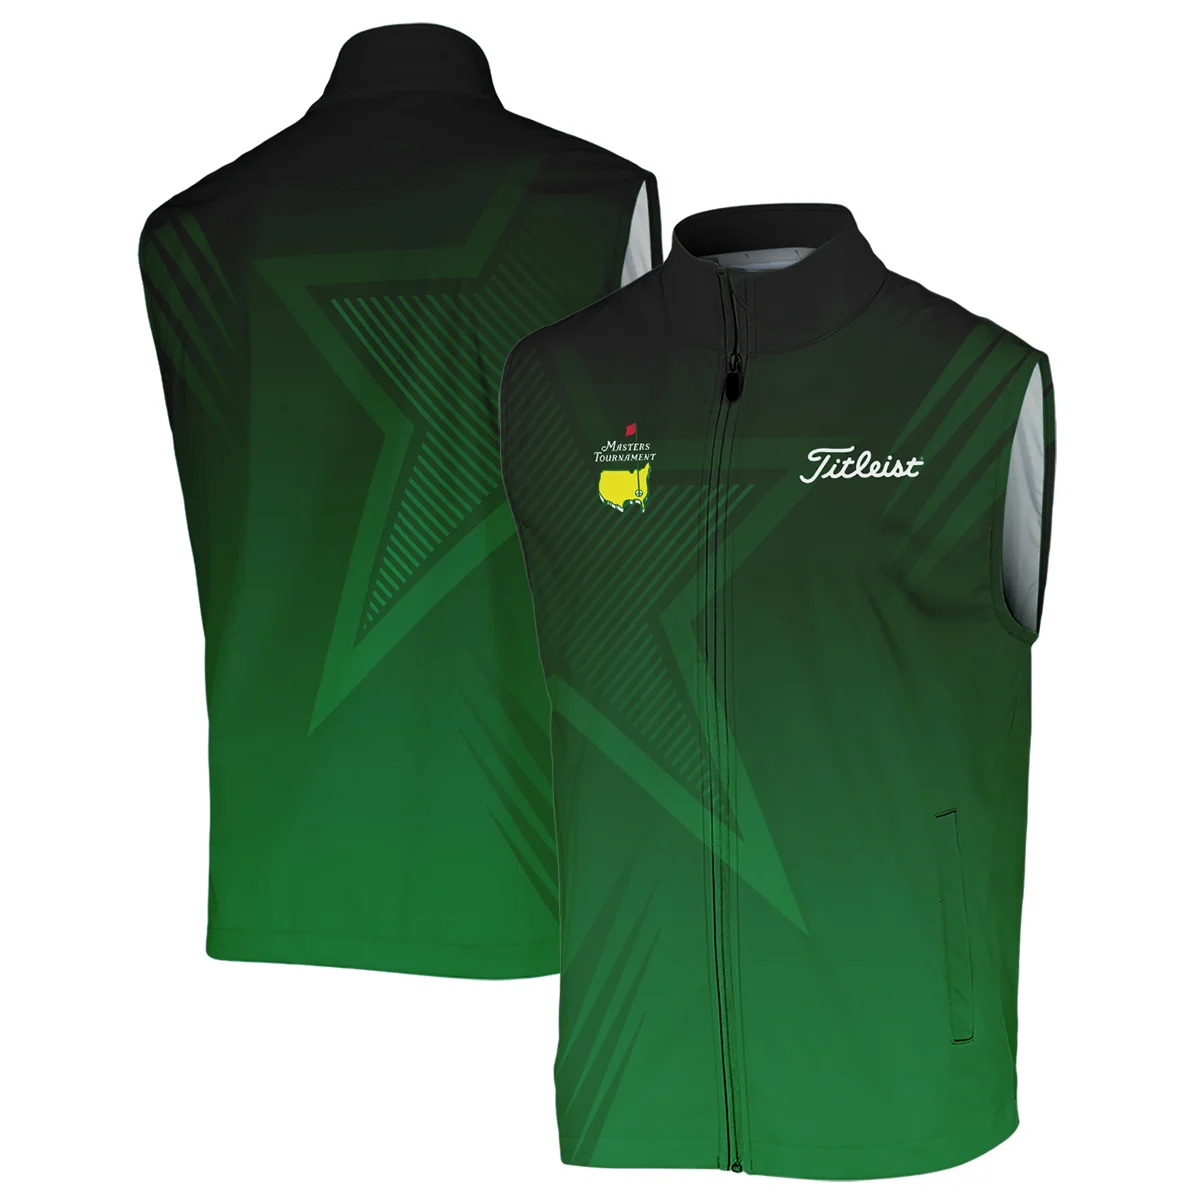 Titleist Masters Tournament Unisex T-Shirt Dark Green Gradient Star Pattern Golf Sports T-Shirt